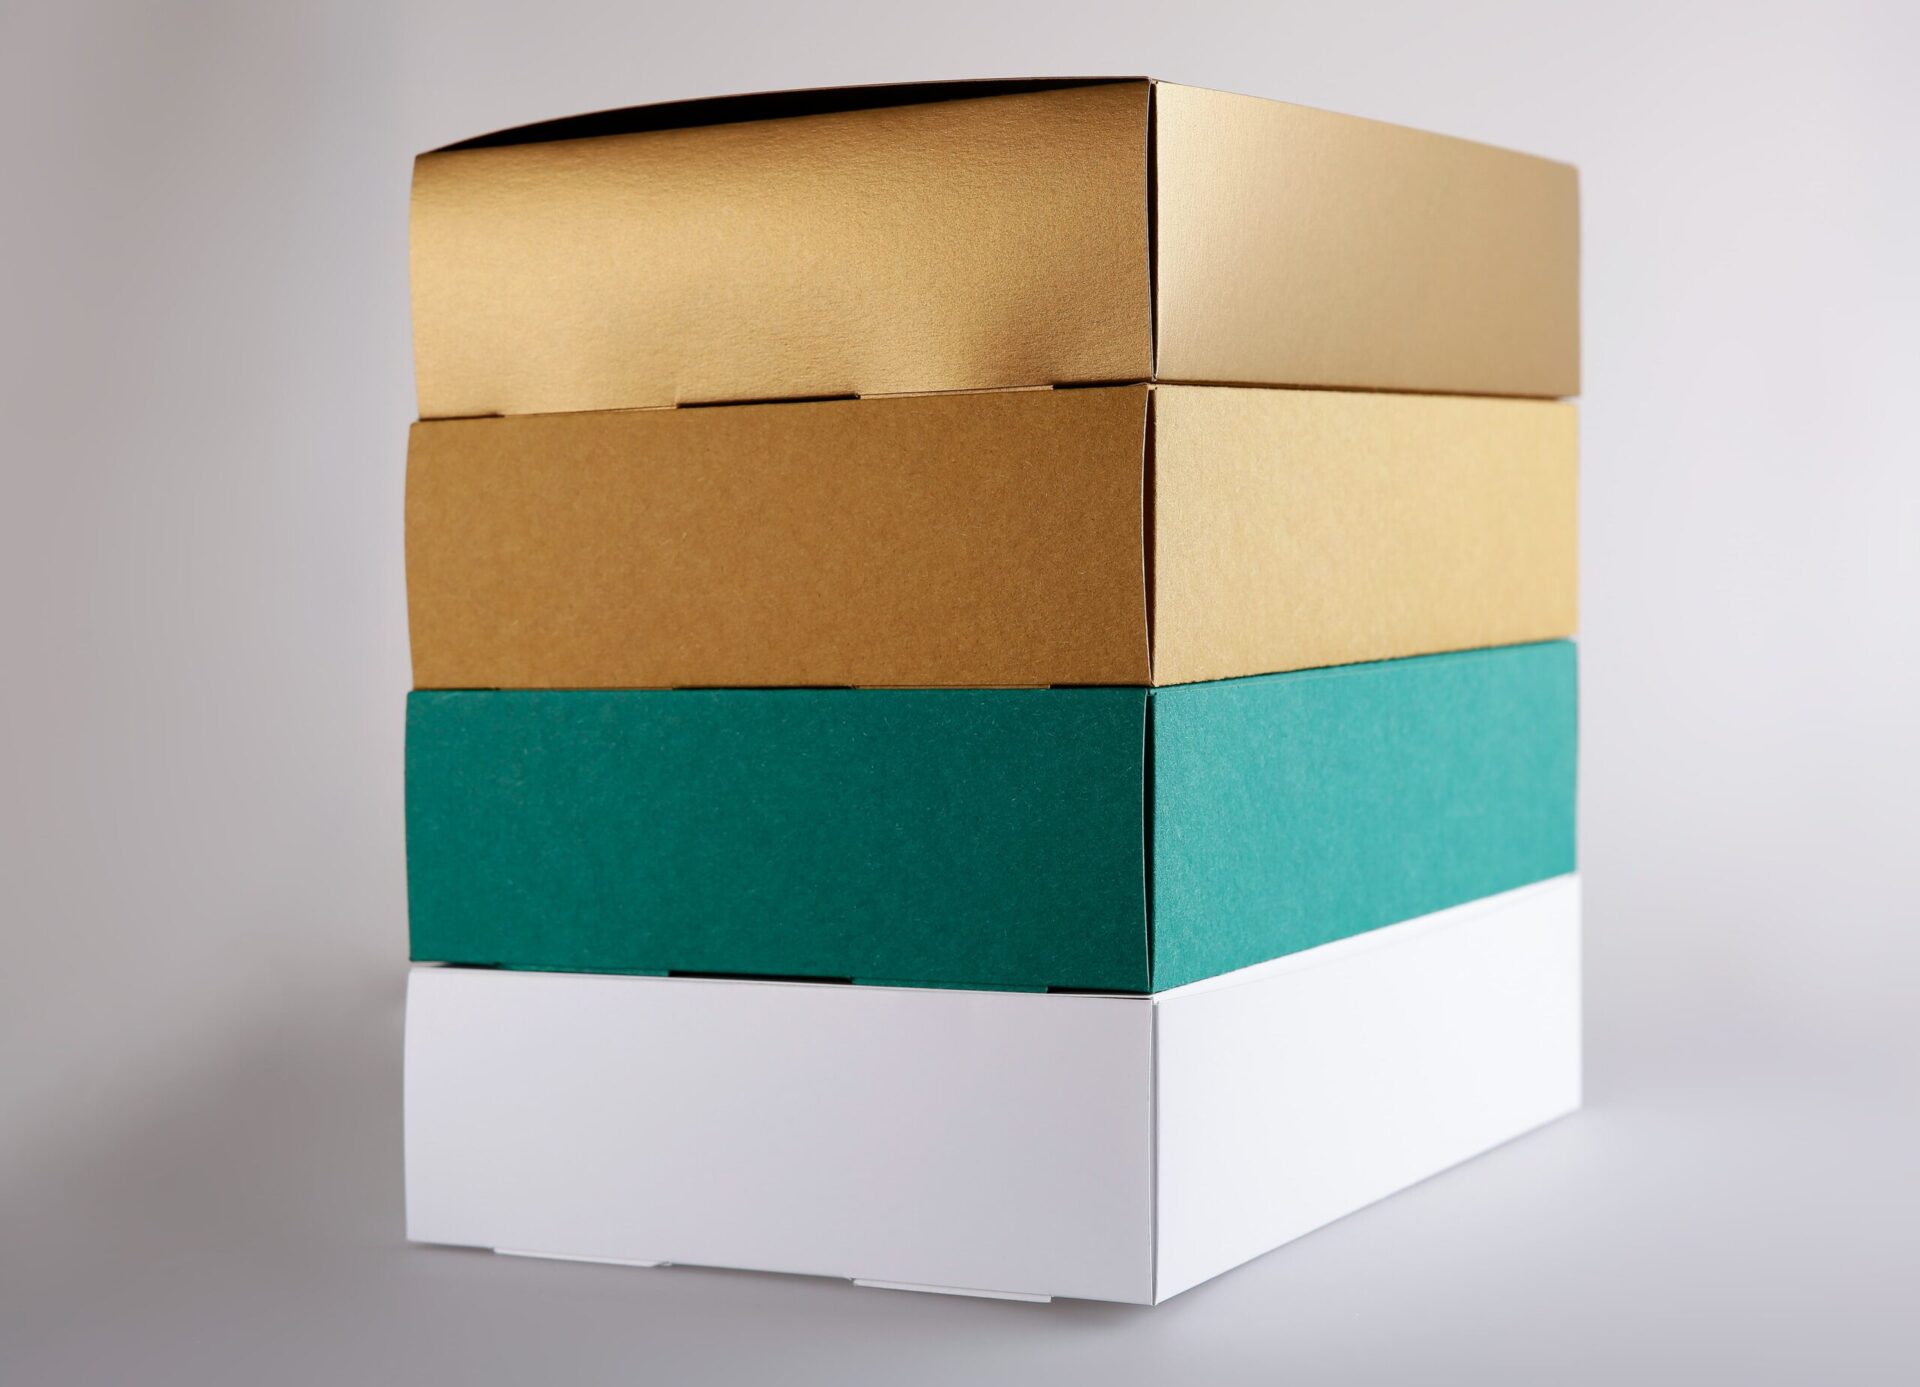 Stapel Verpackungen bedruckt Gold, Grün und Weiss